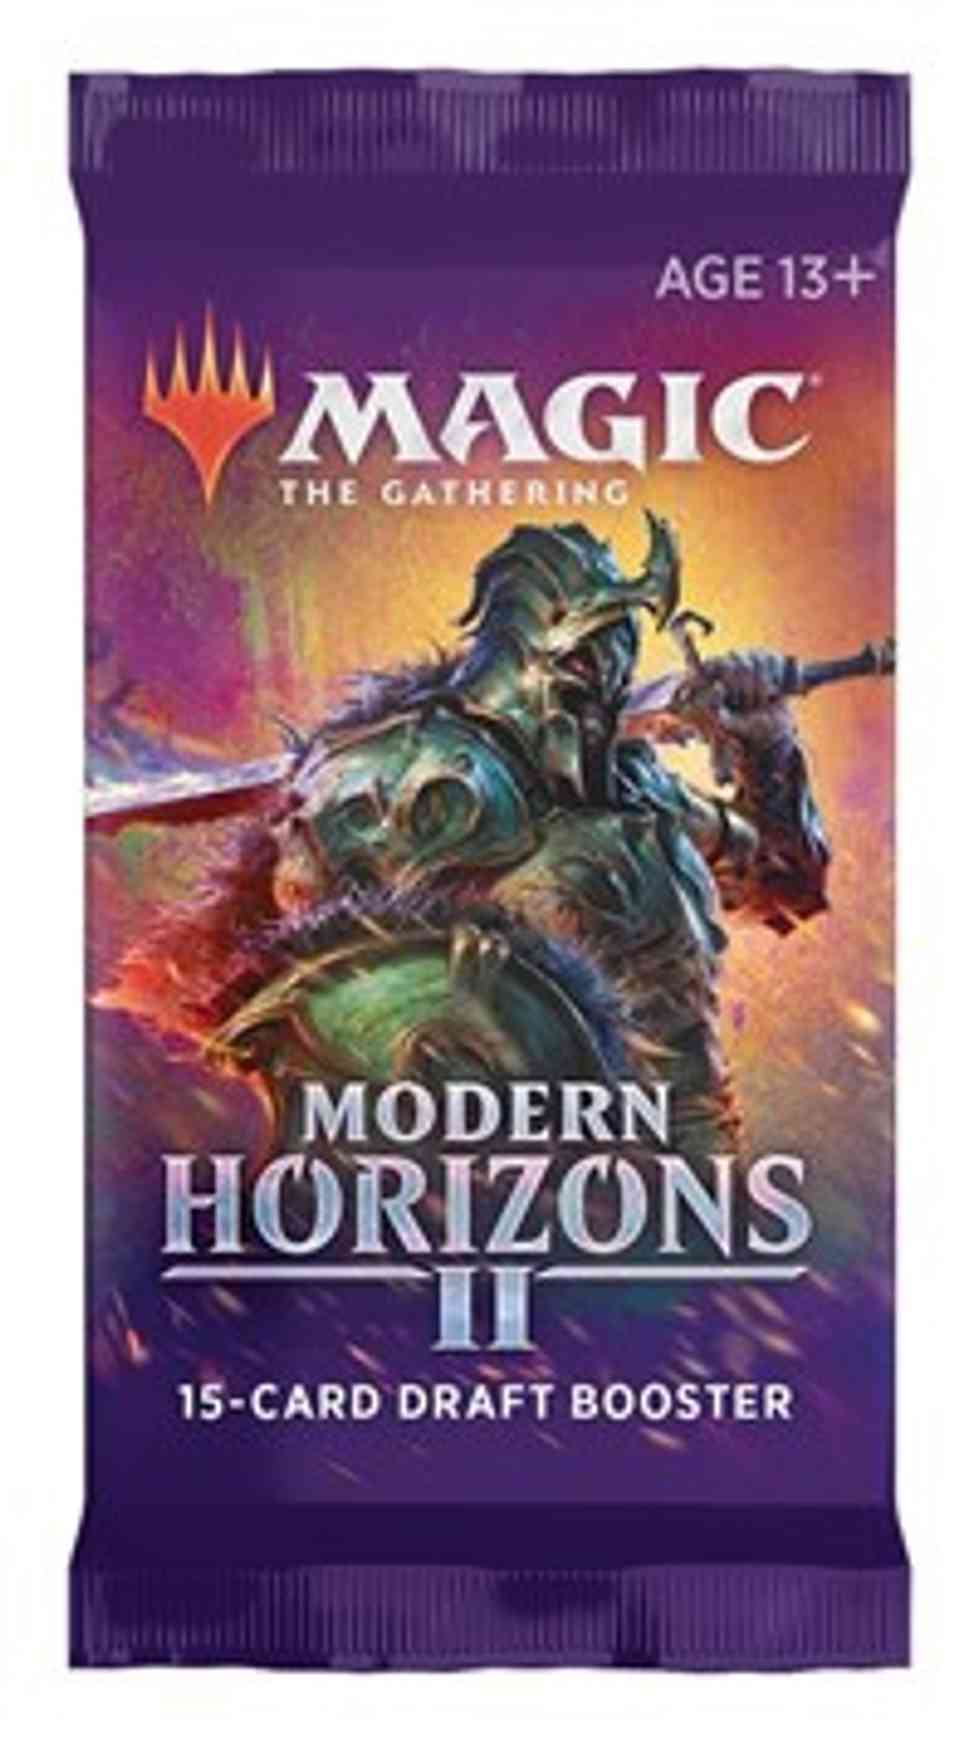 Modern Horizons 2 - Draft Booster Pack magic card front